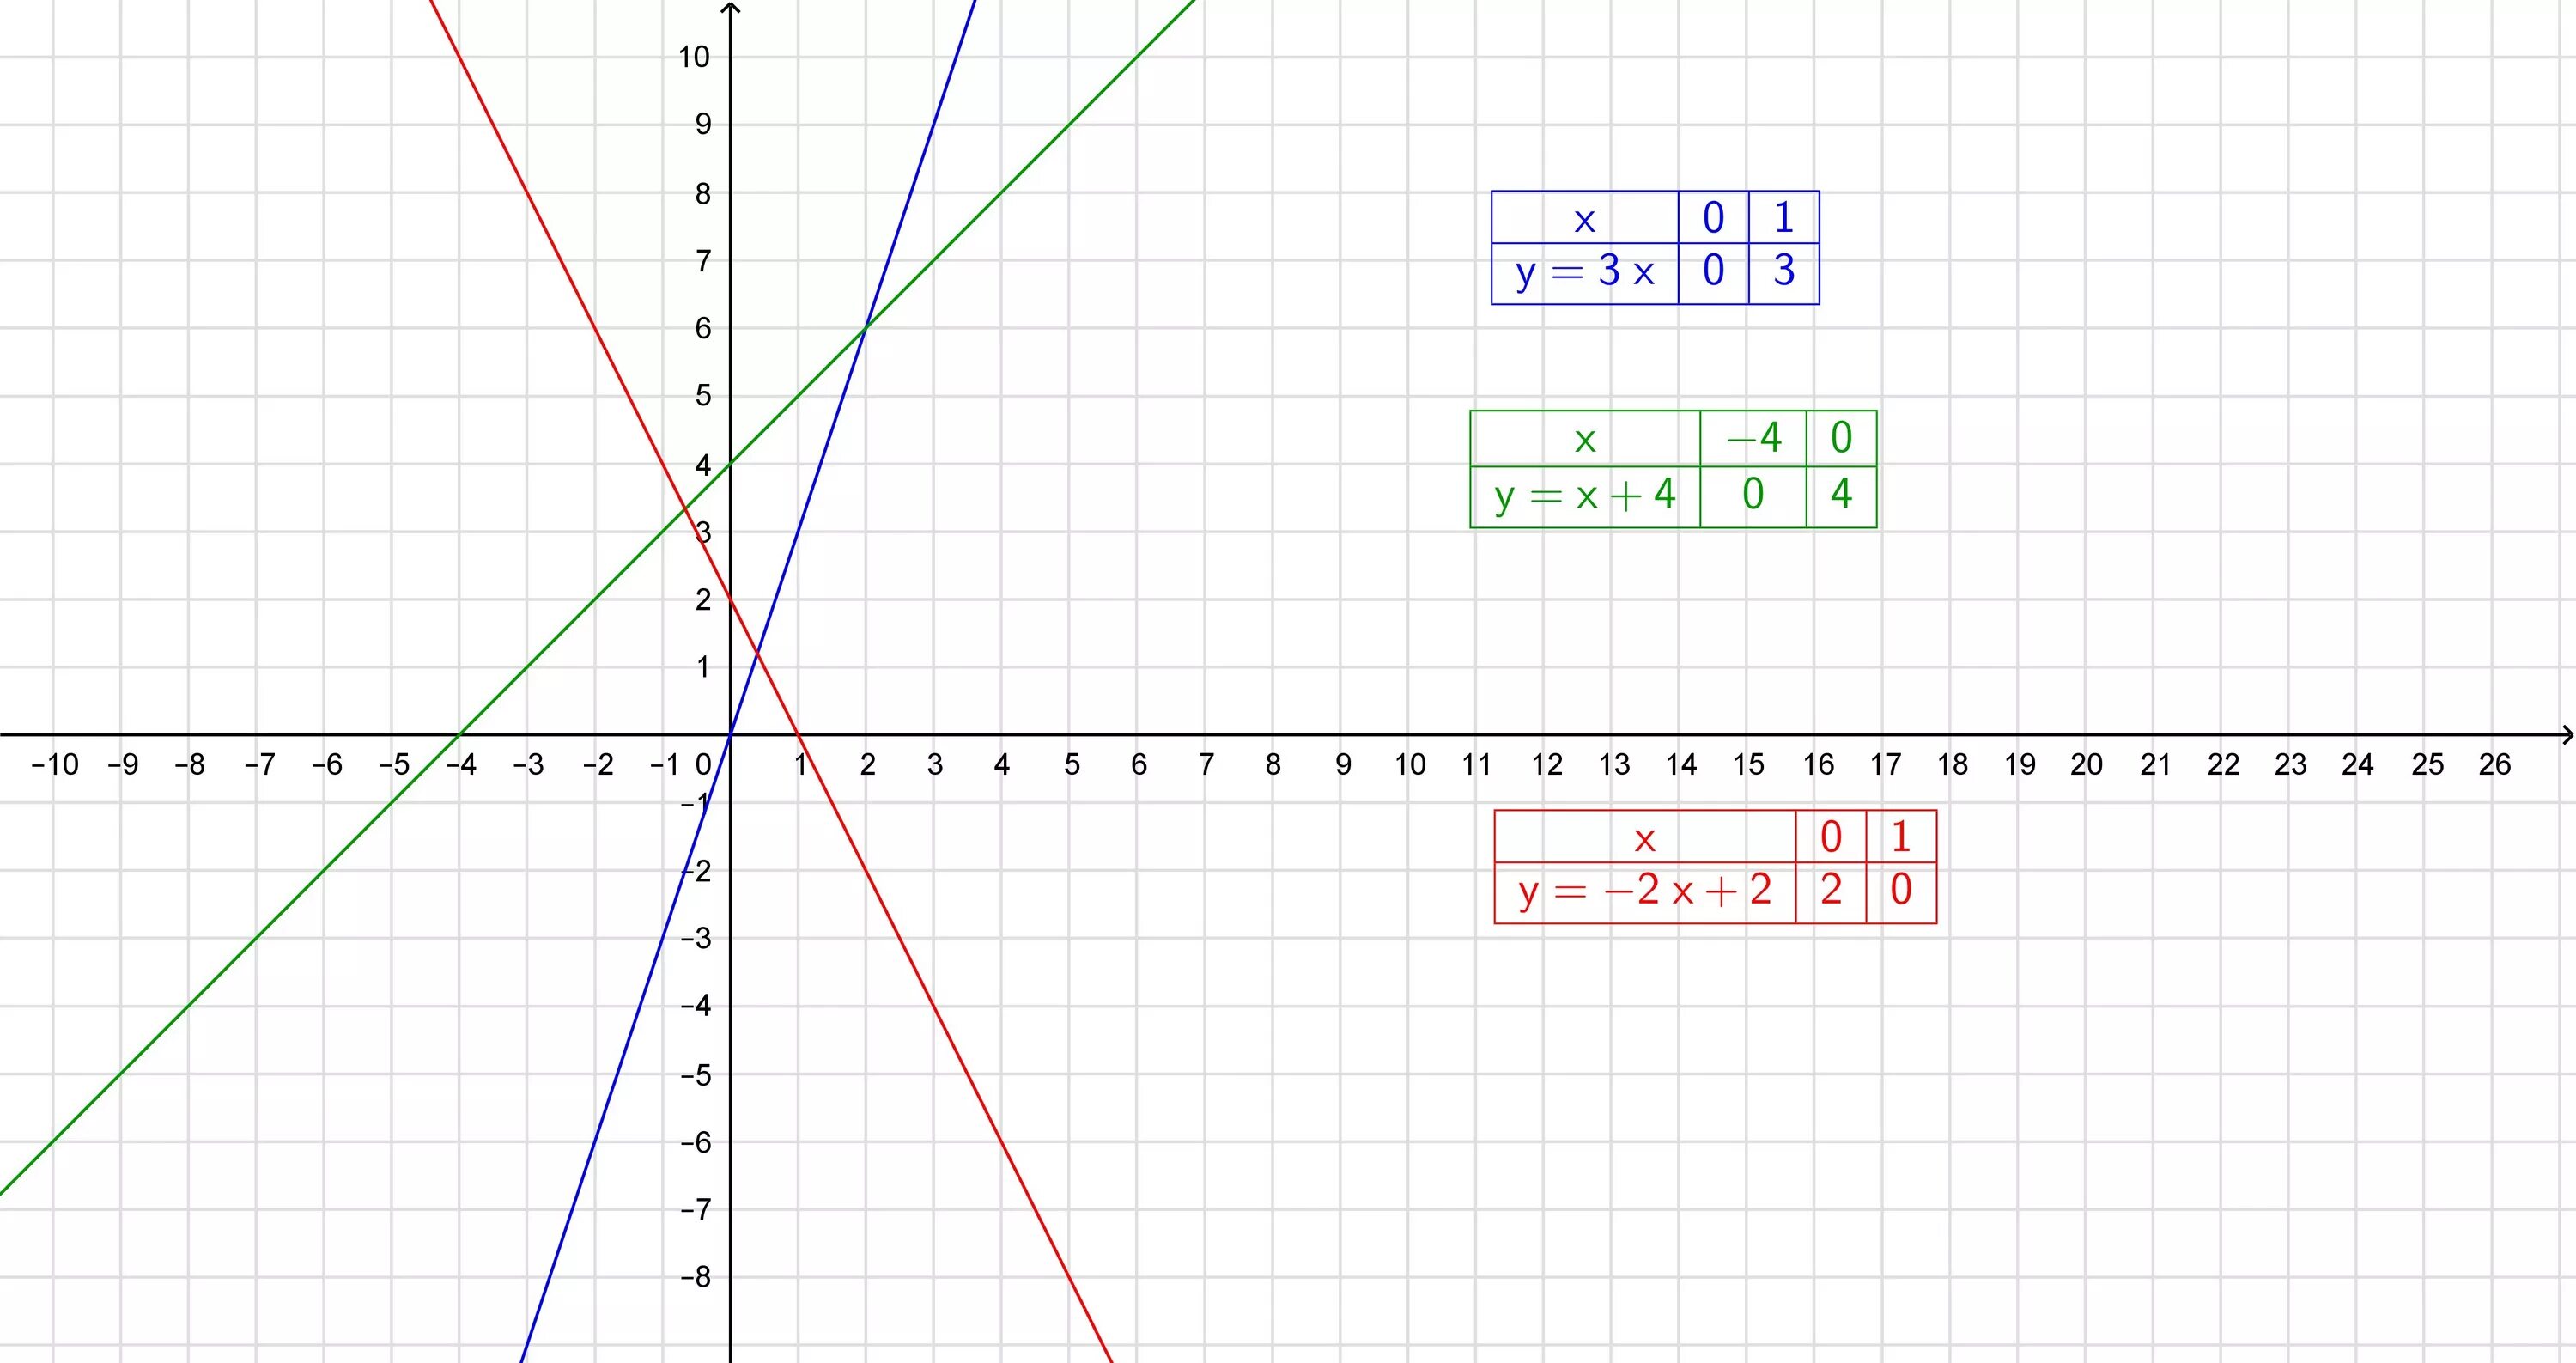 2y 2x 2 постройте график. Y 3x 1 график функции. Y 3x 2 график функции. Y 3x 4 график функции. На одном чертеже постройте графики функций.